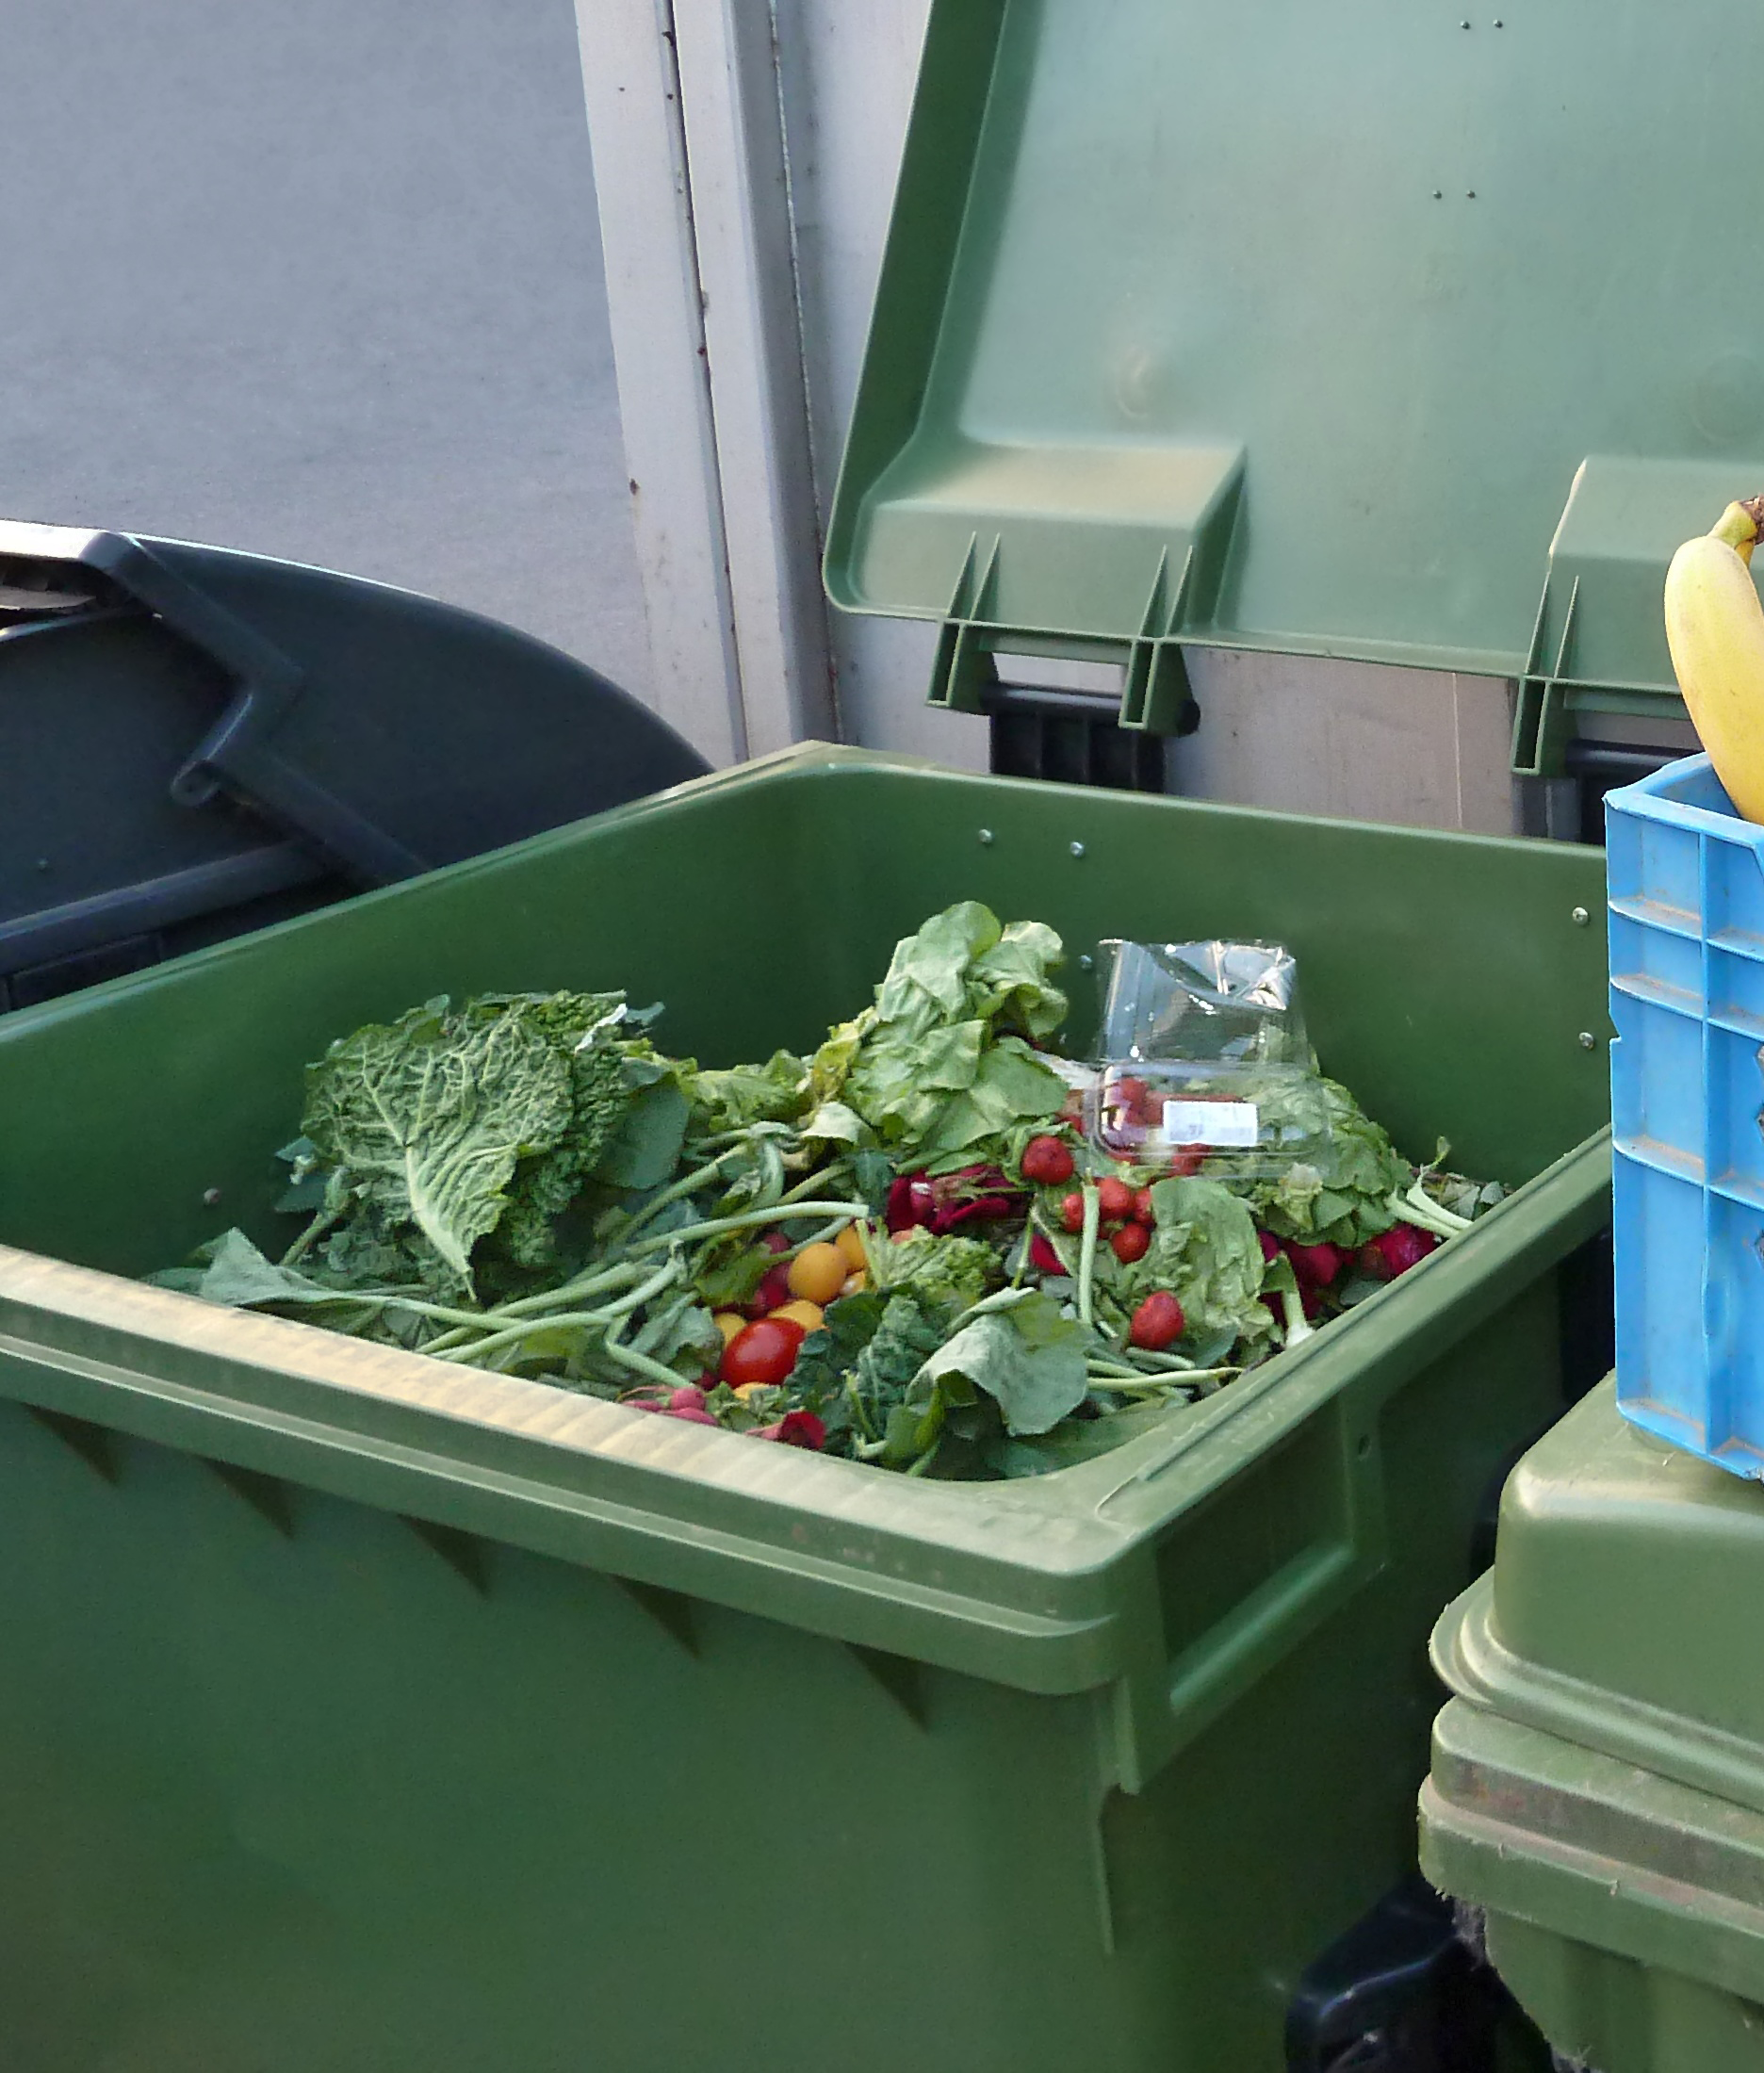 Frontpage Image (Trash bin filled with food)